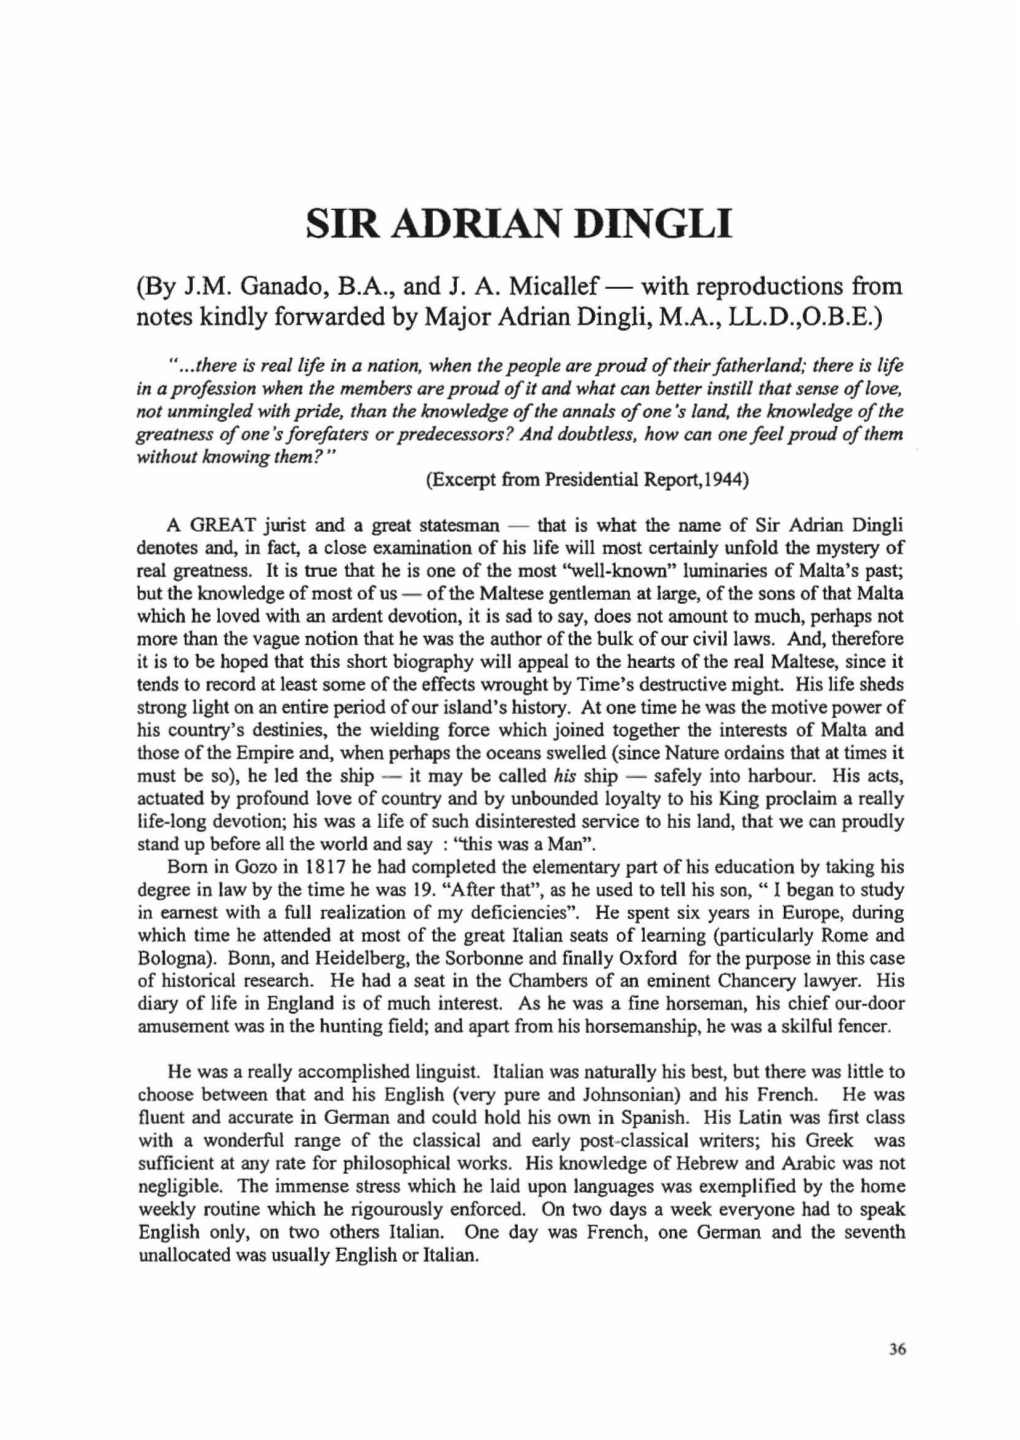 Sir Adrian Dingli